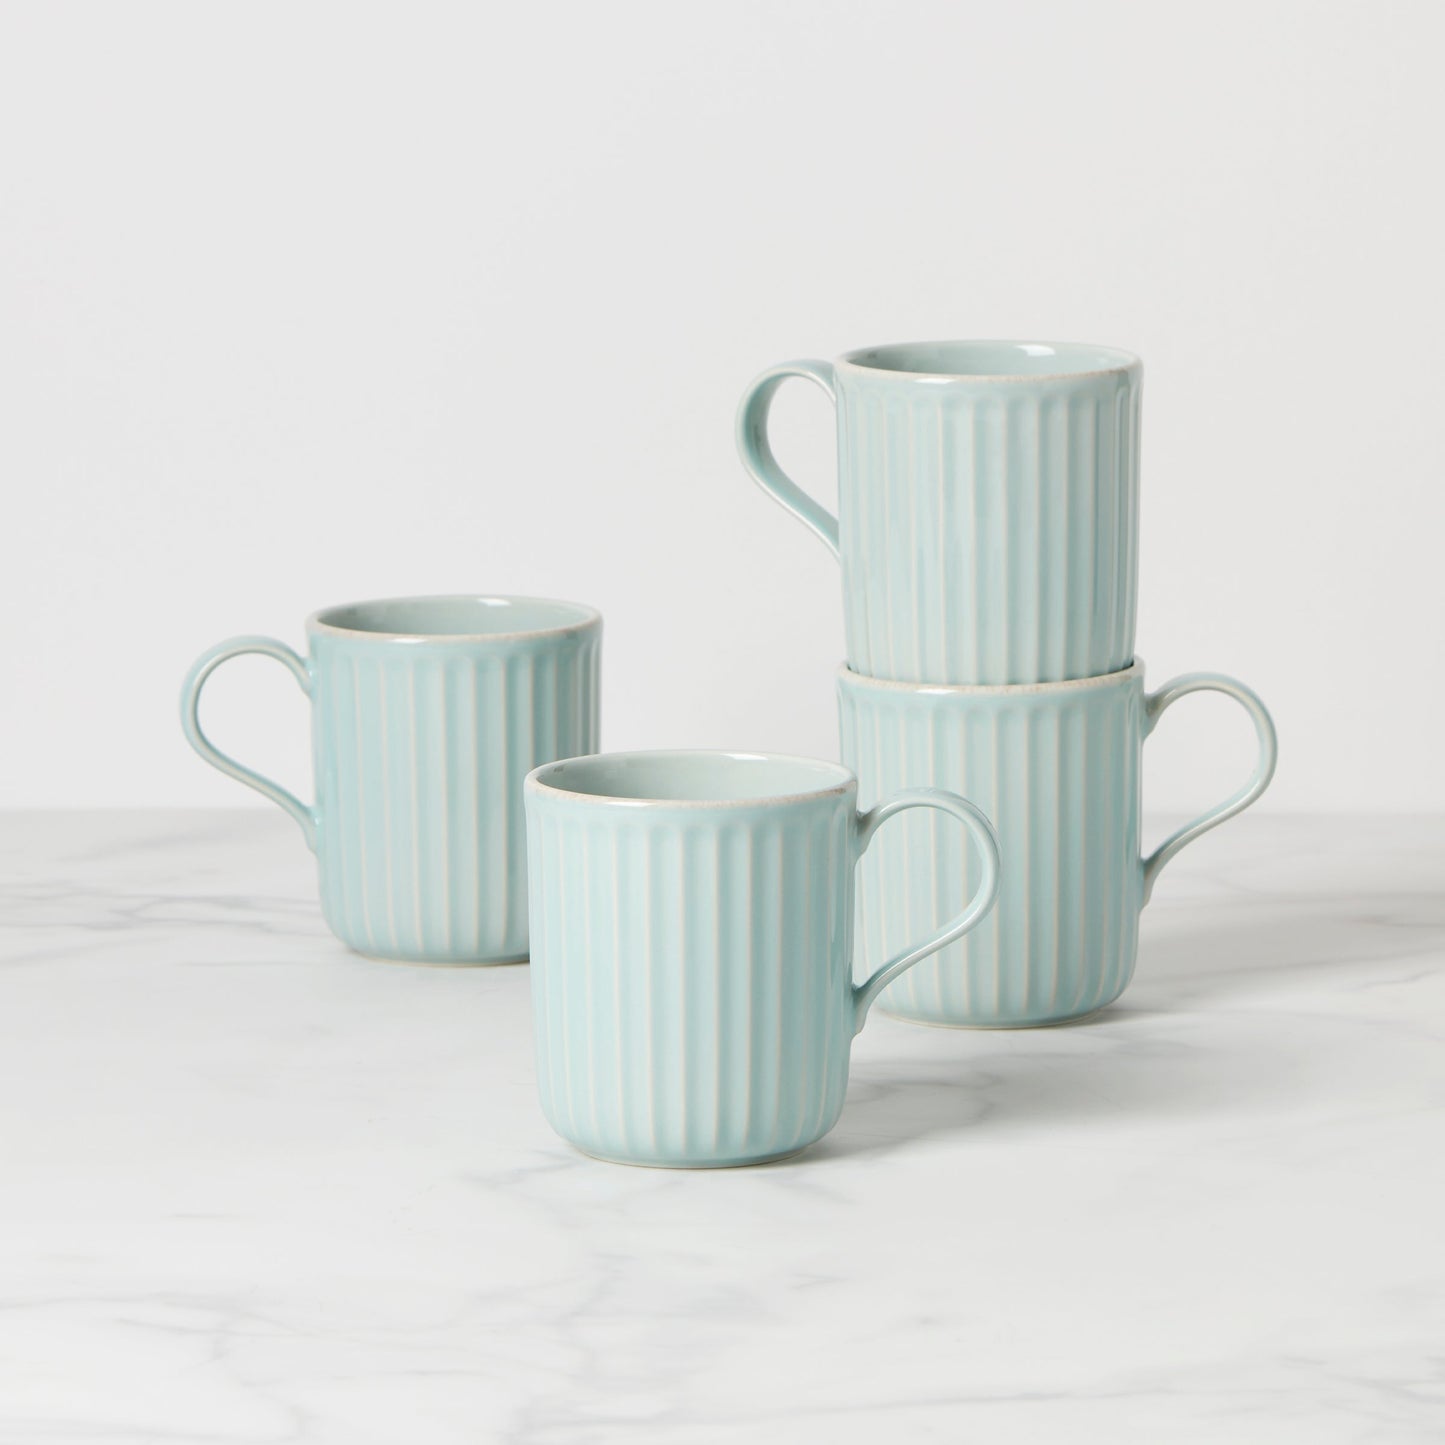 French Perle Scallop Mugs, Set of 4